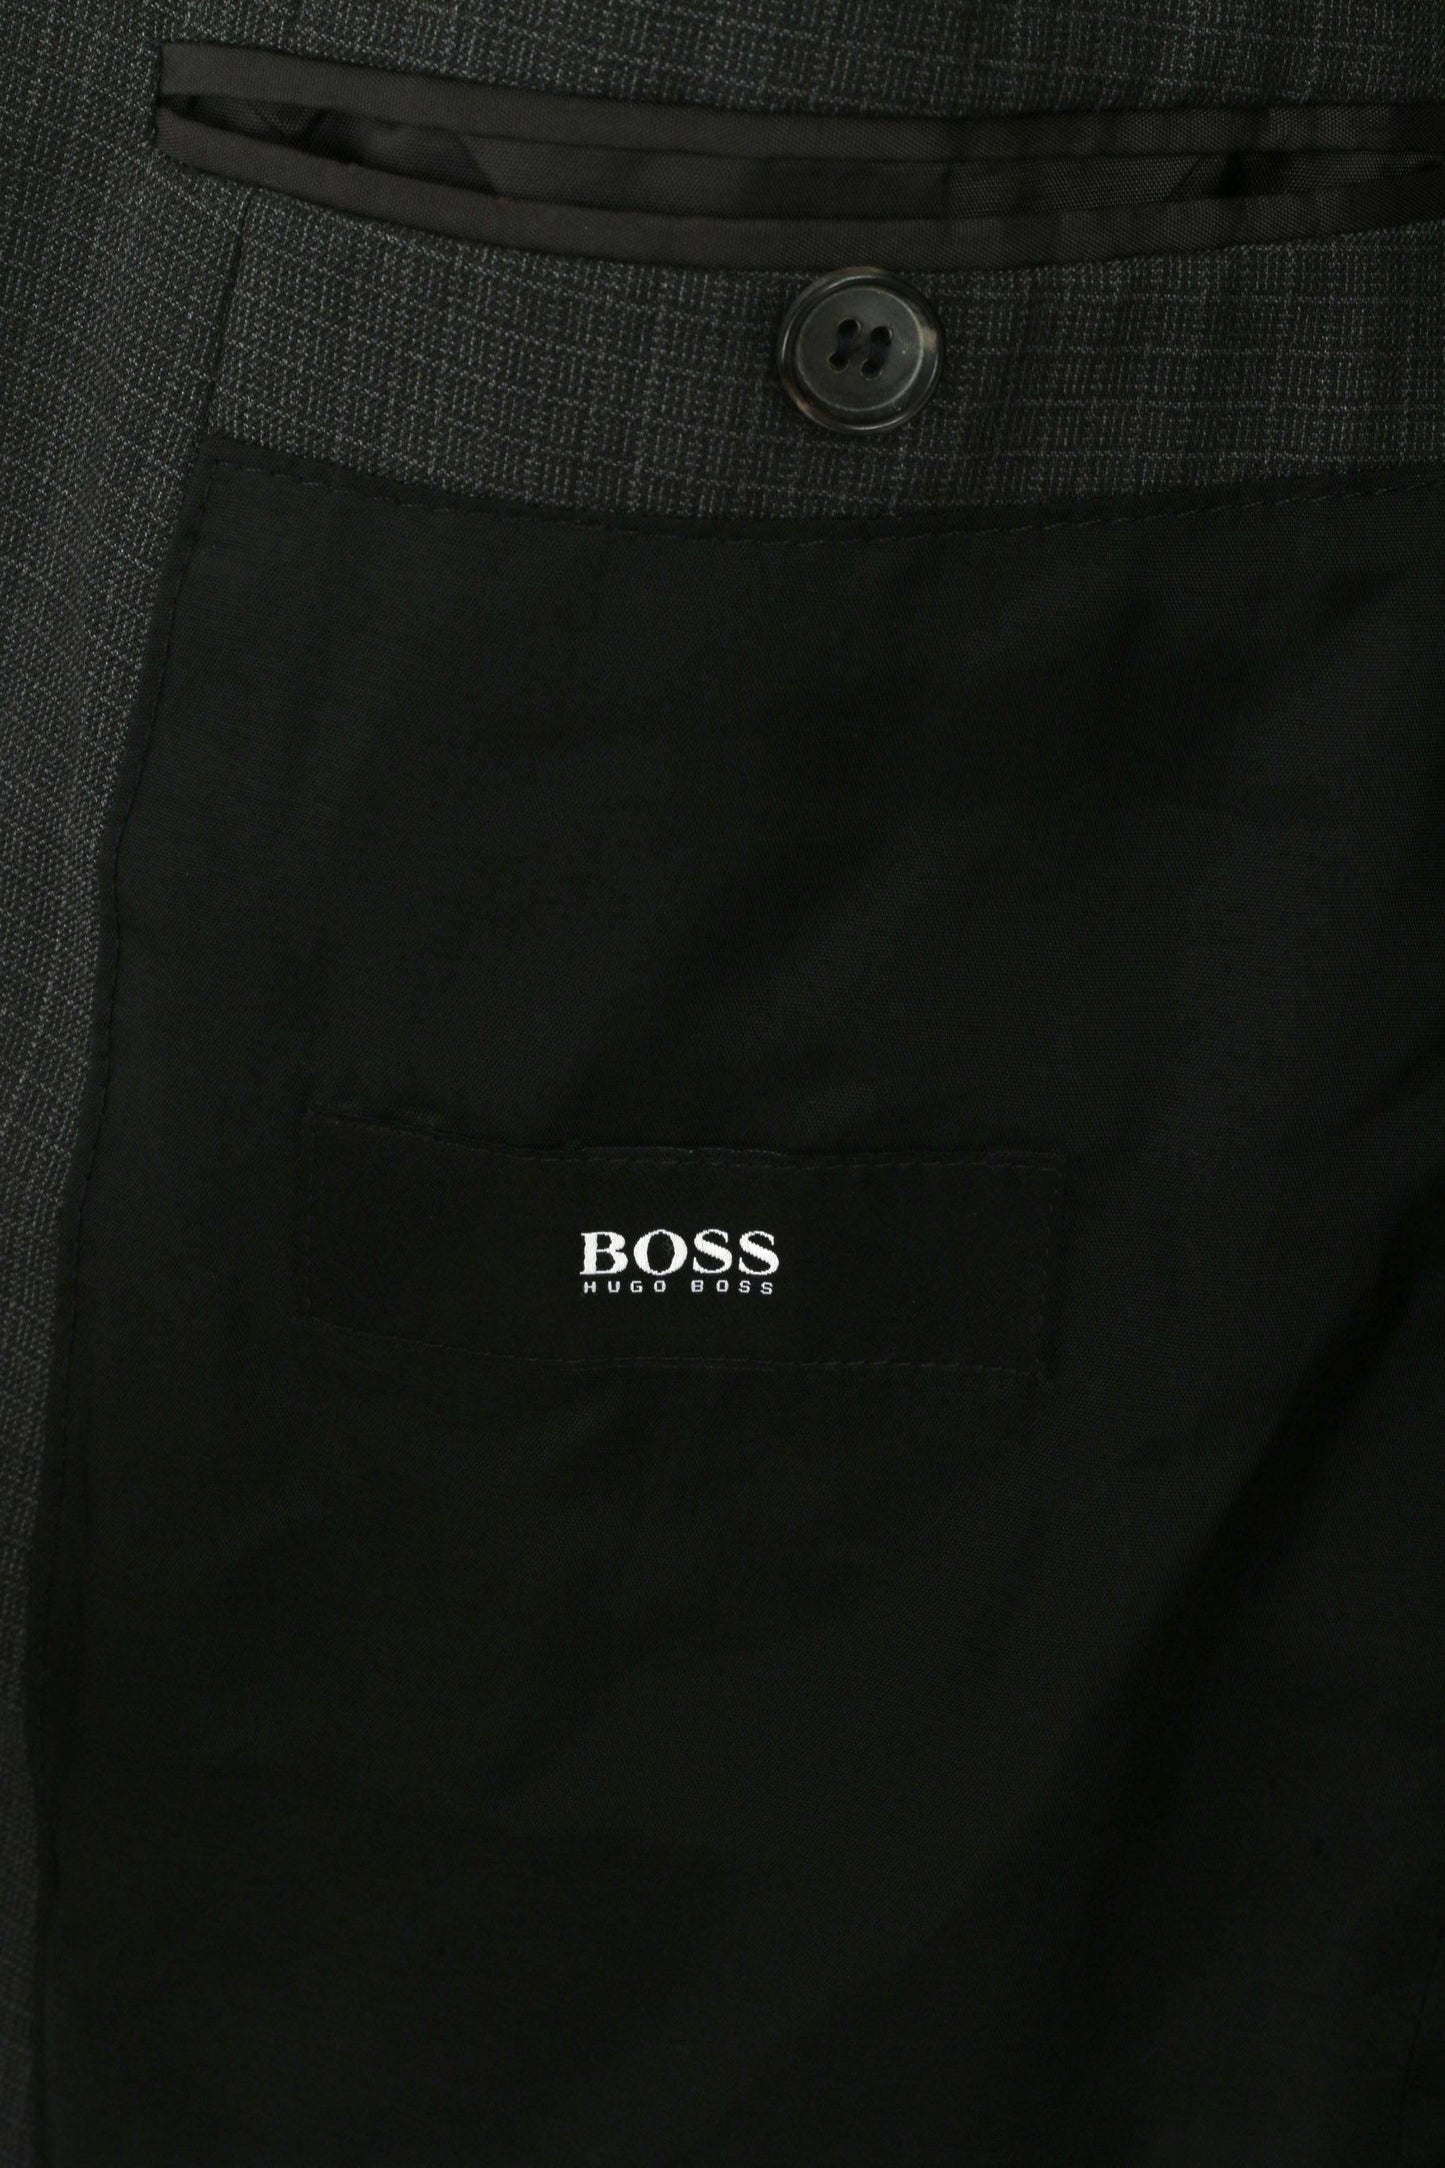 Hugo Boss Uomo 50 40 Blazer Giacca Super 100 monopetto in lana grigia